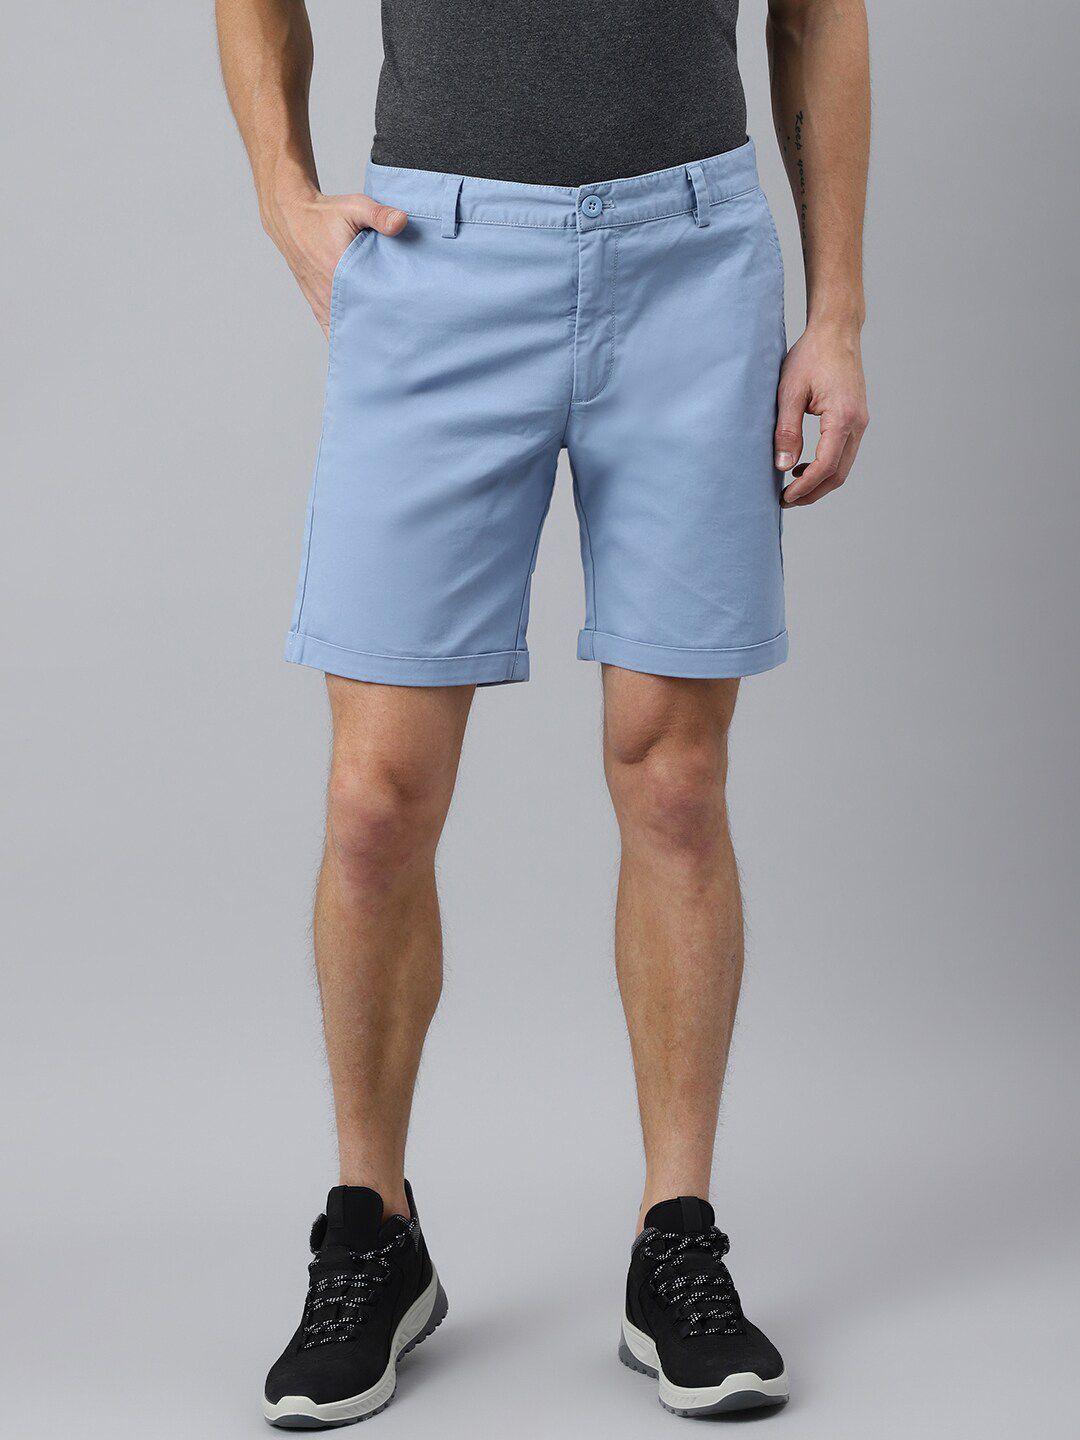 woodland-men-blue-denim-shorts